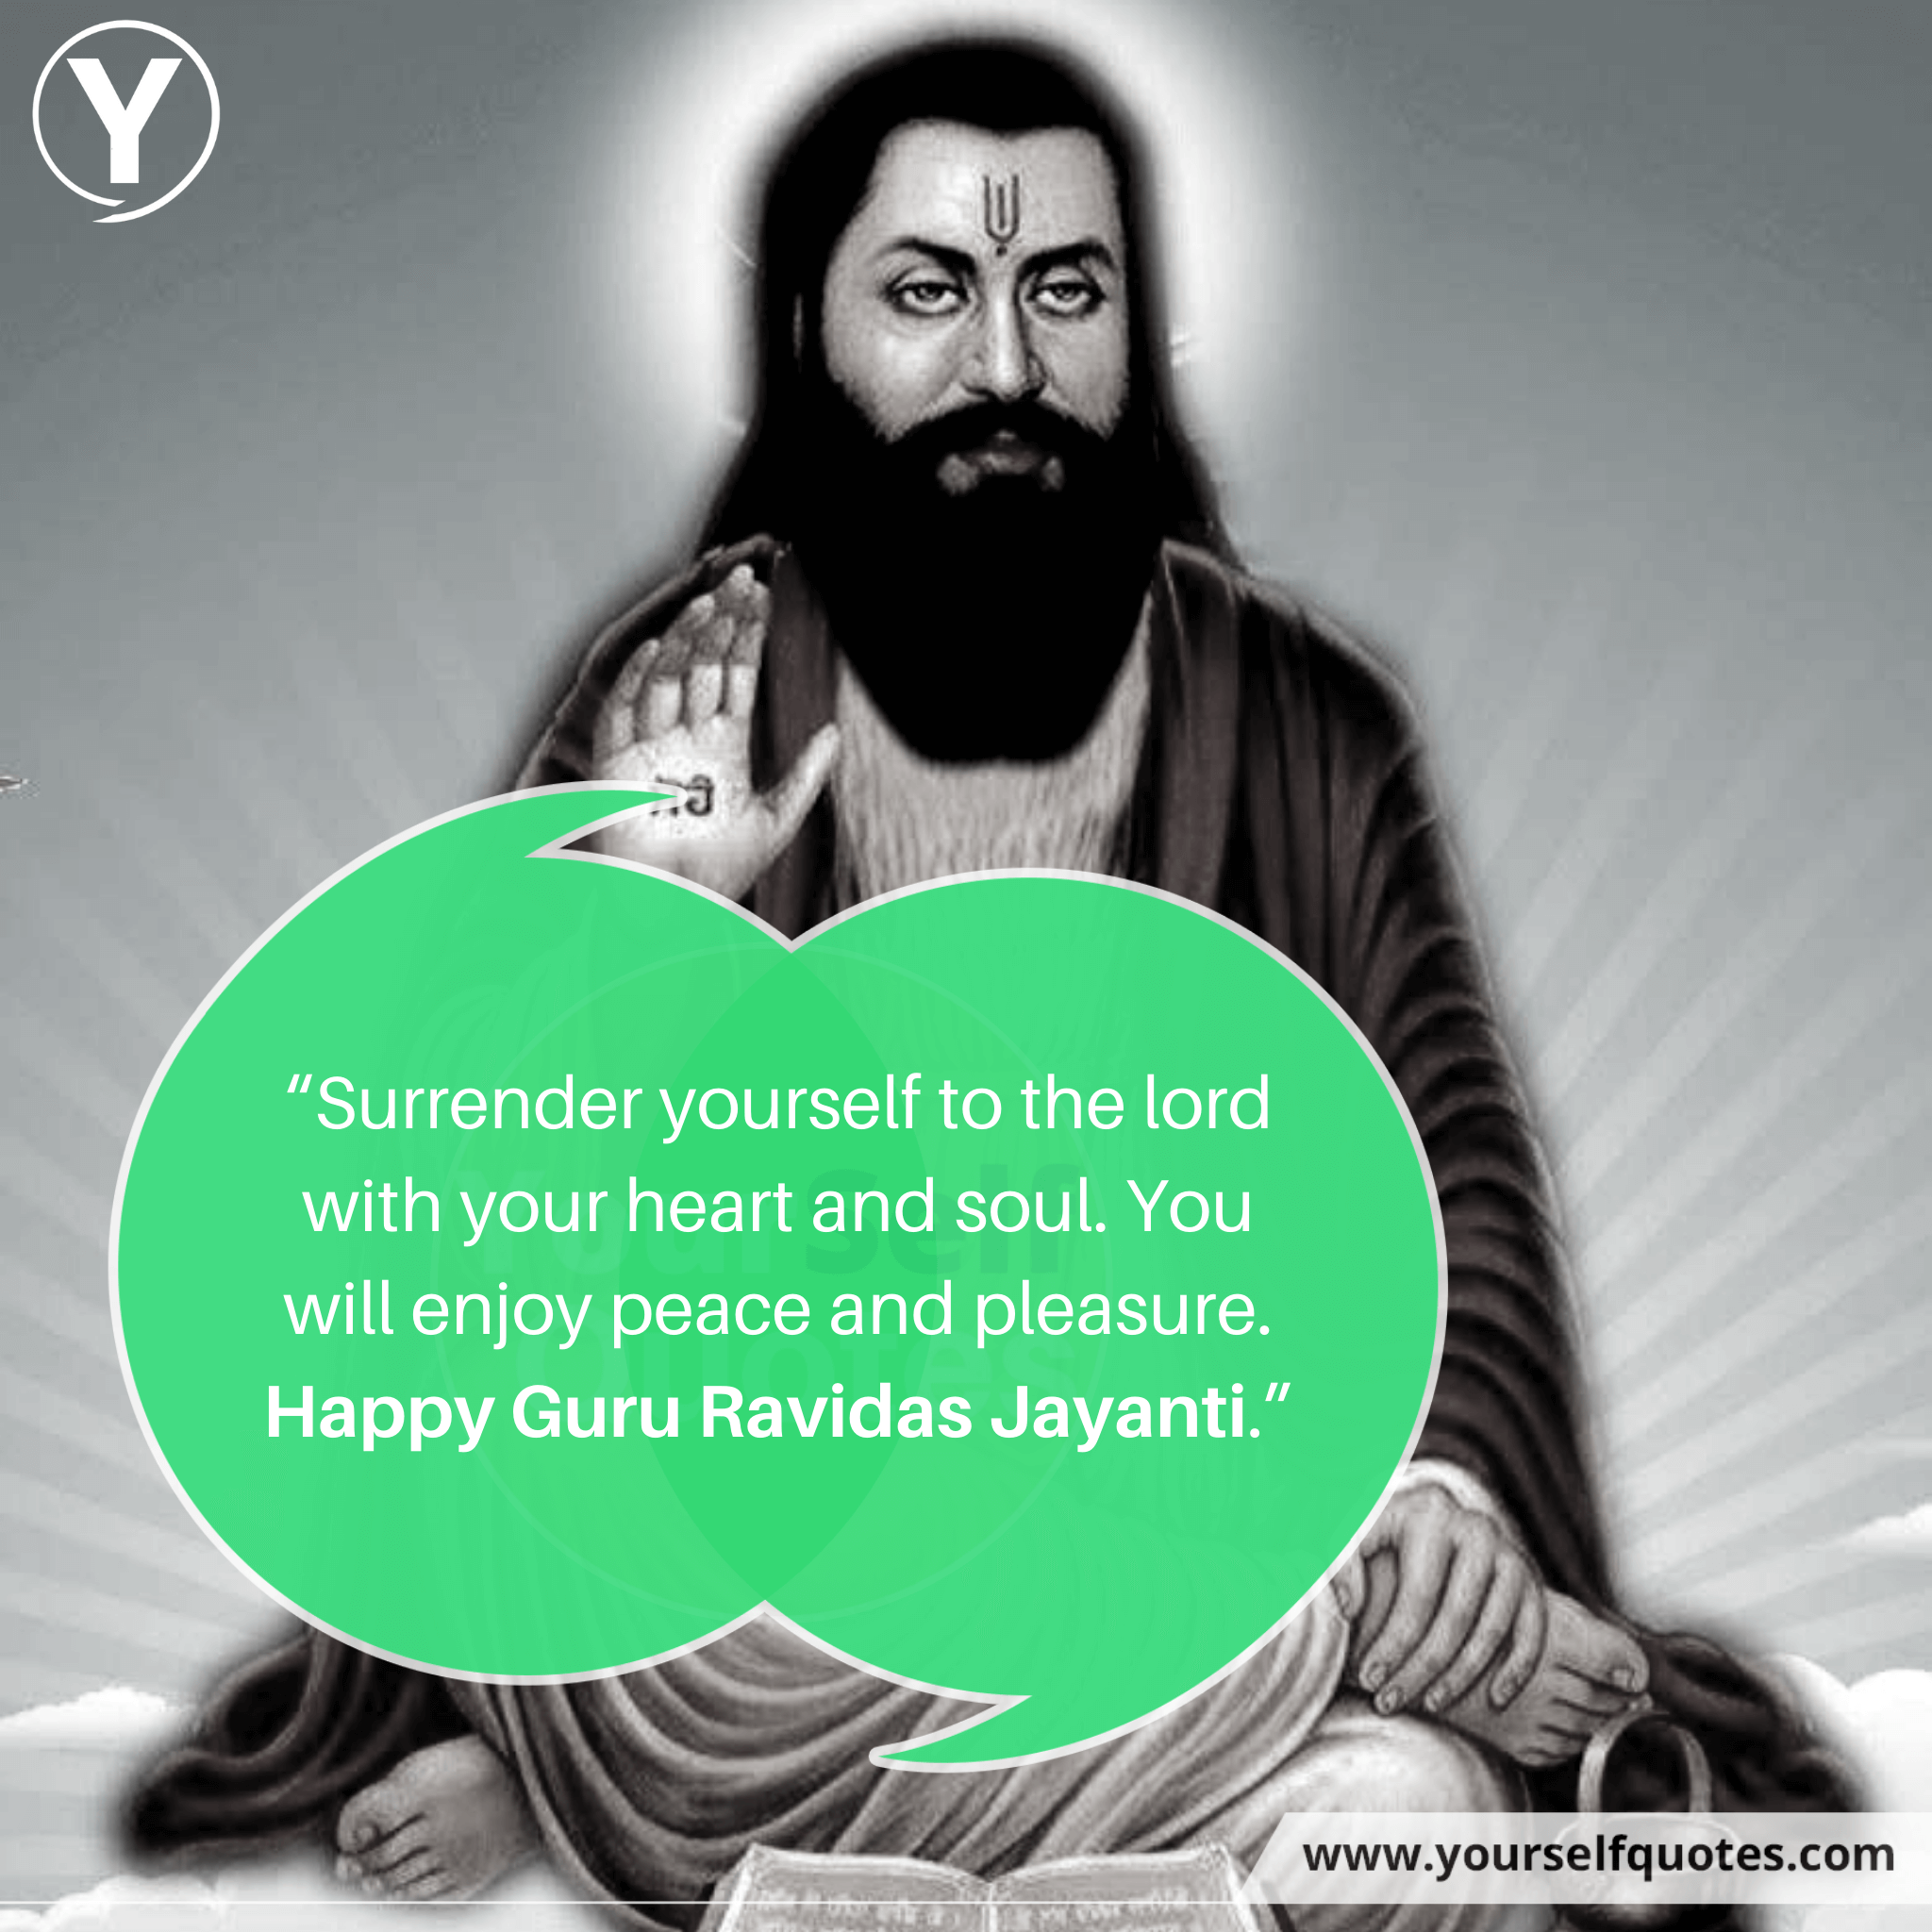 Guru Ravidas Jayanti Wishes